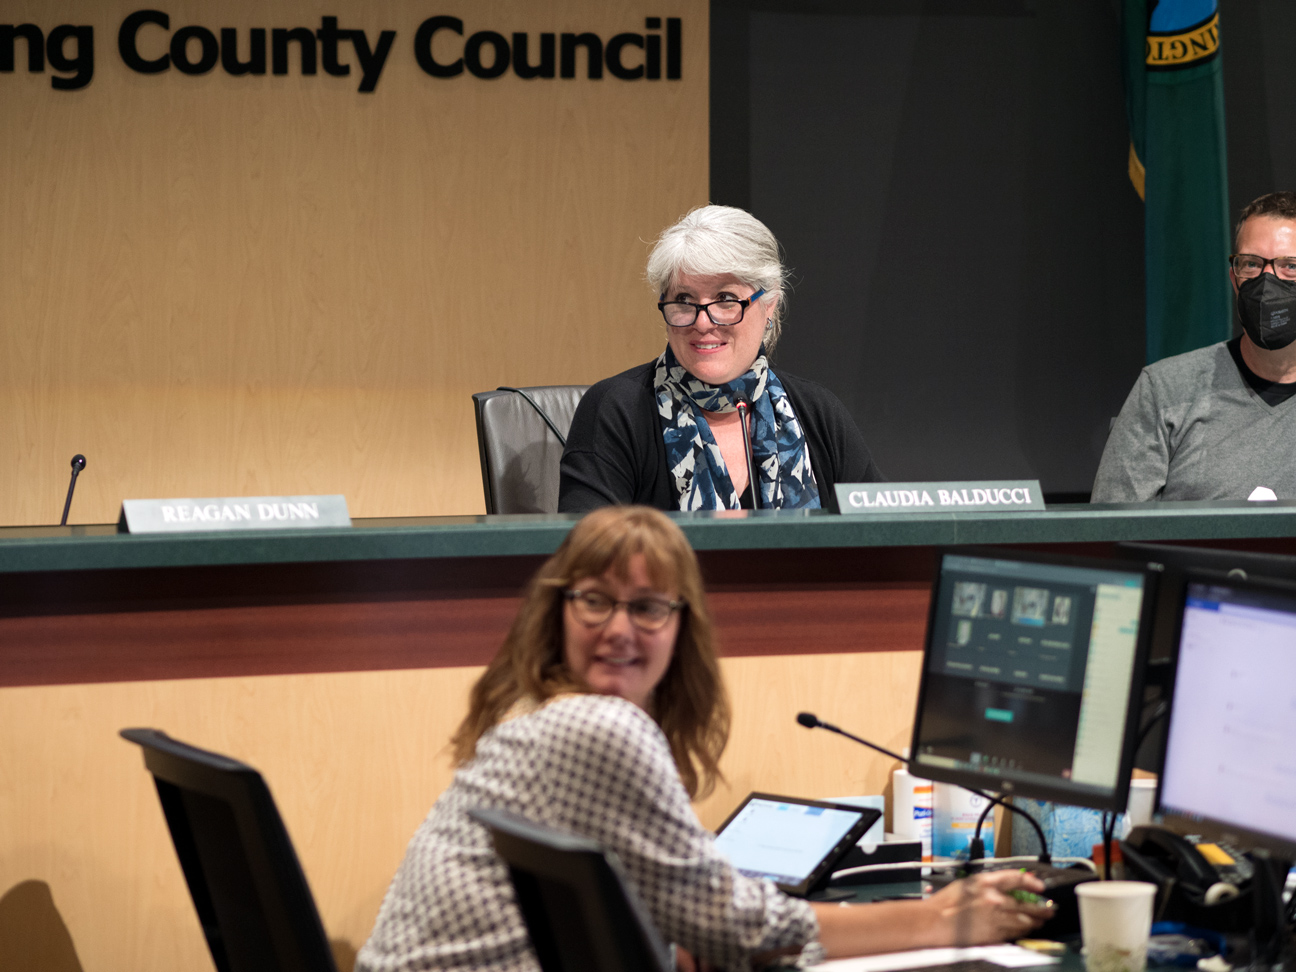 Claudia Balducci chairs a King County Council meeting